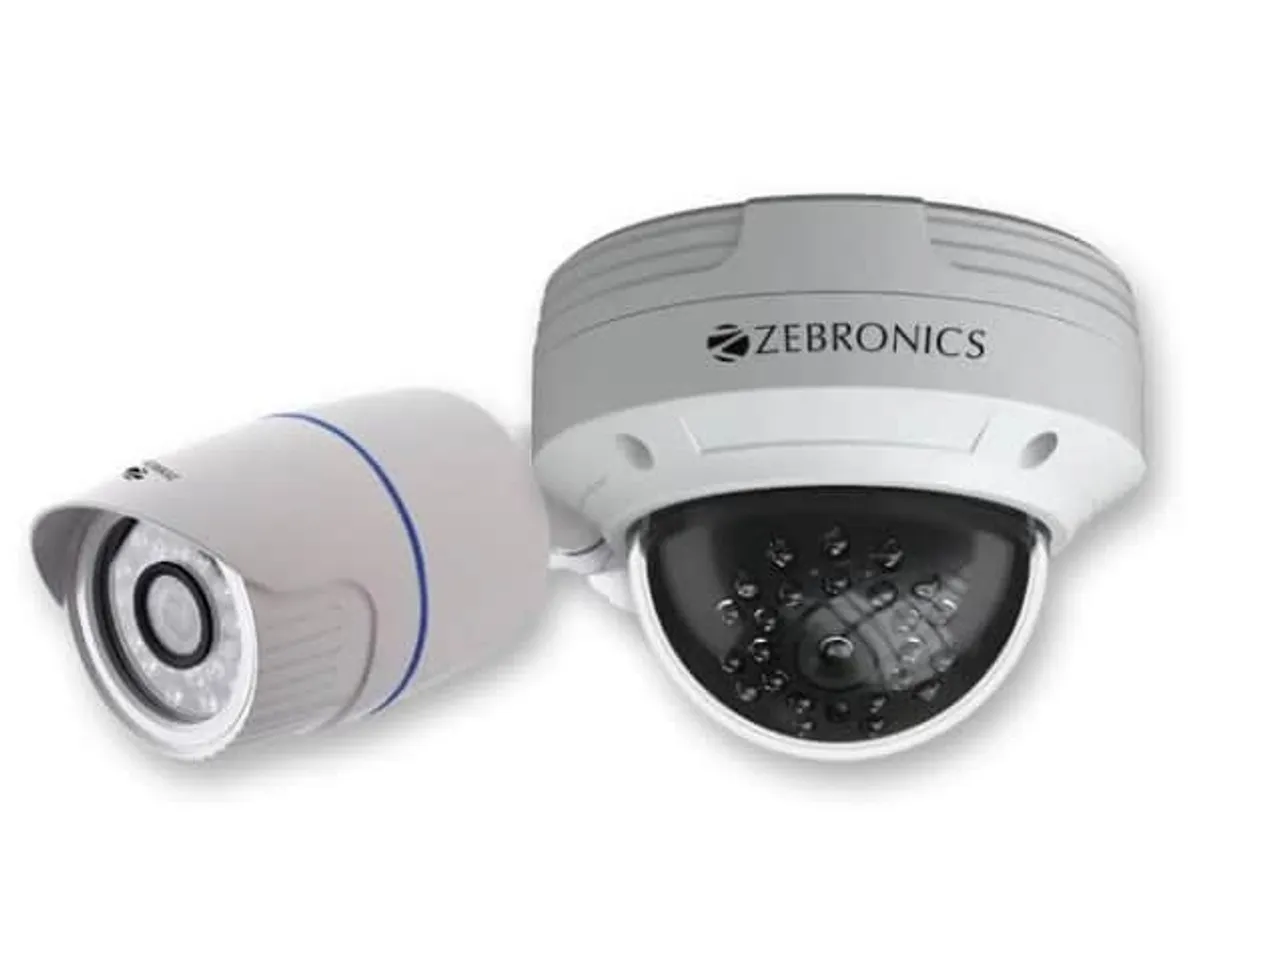 Zebronics launches models of IP Cameras